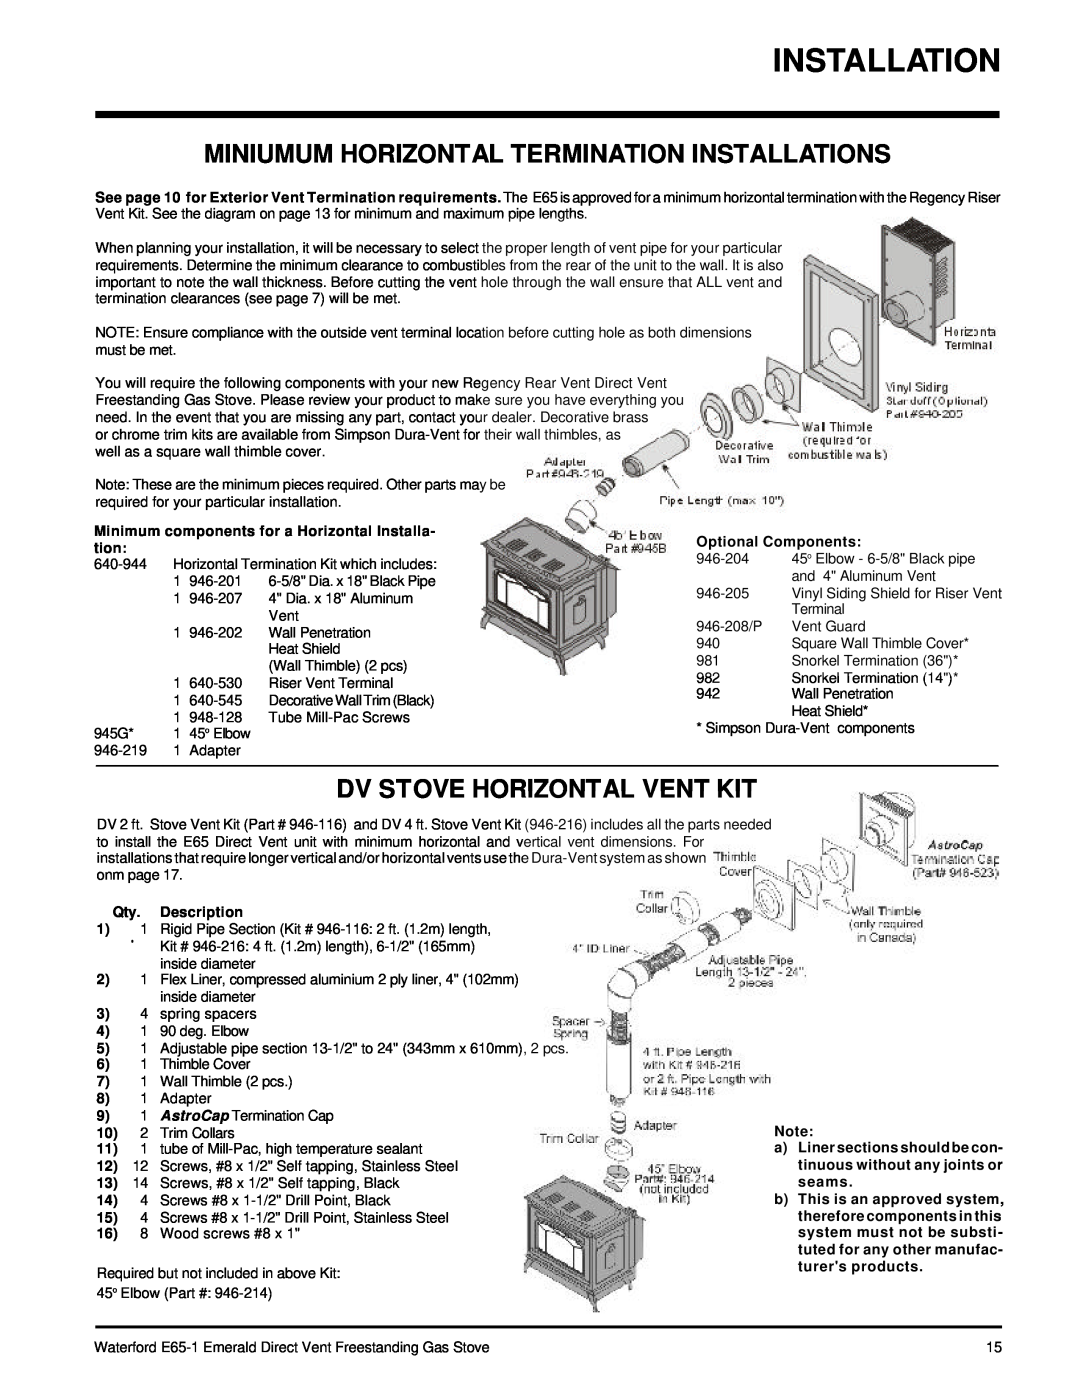 Waterford Appliances E65-LP1 Miniumum Horizontal Termination Installations, Dv Stove Horizontal Vent Kit, Qty. Description 